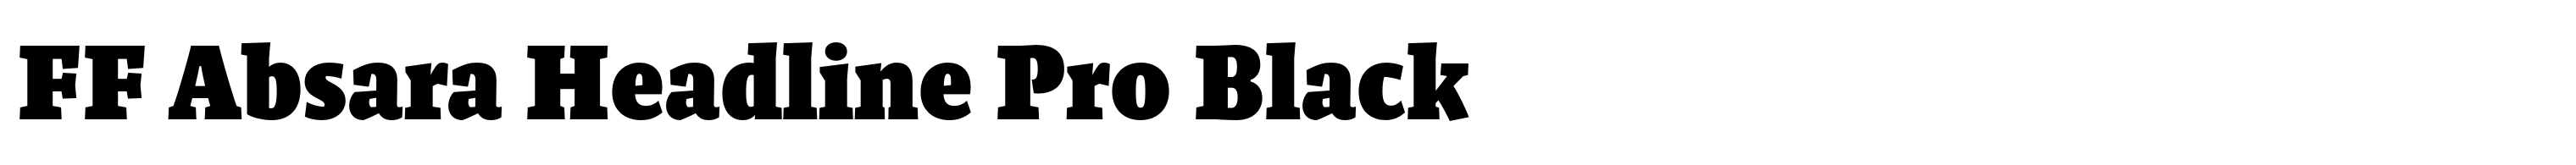 FF Absara Headline Pro Black